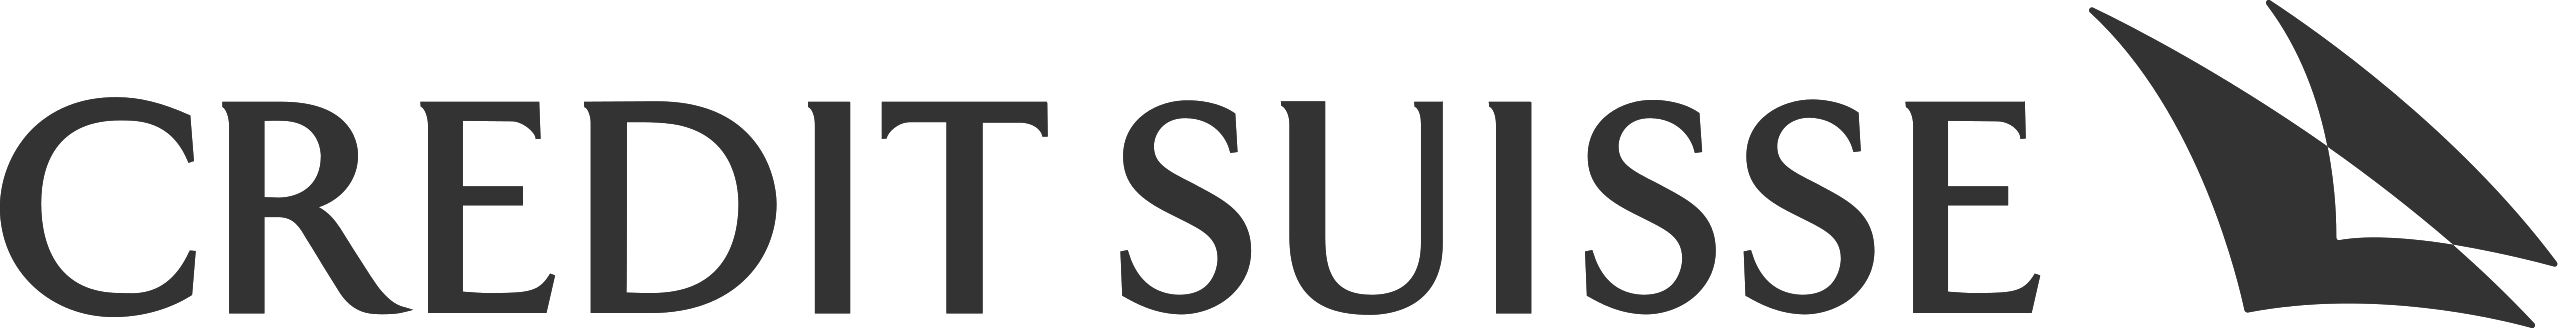 creditsuisse-logo